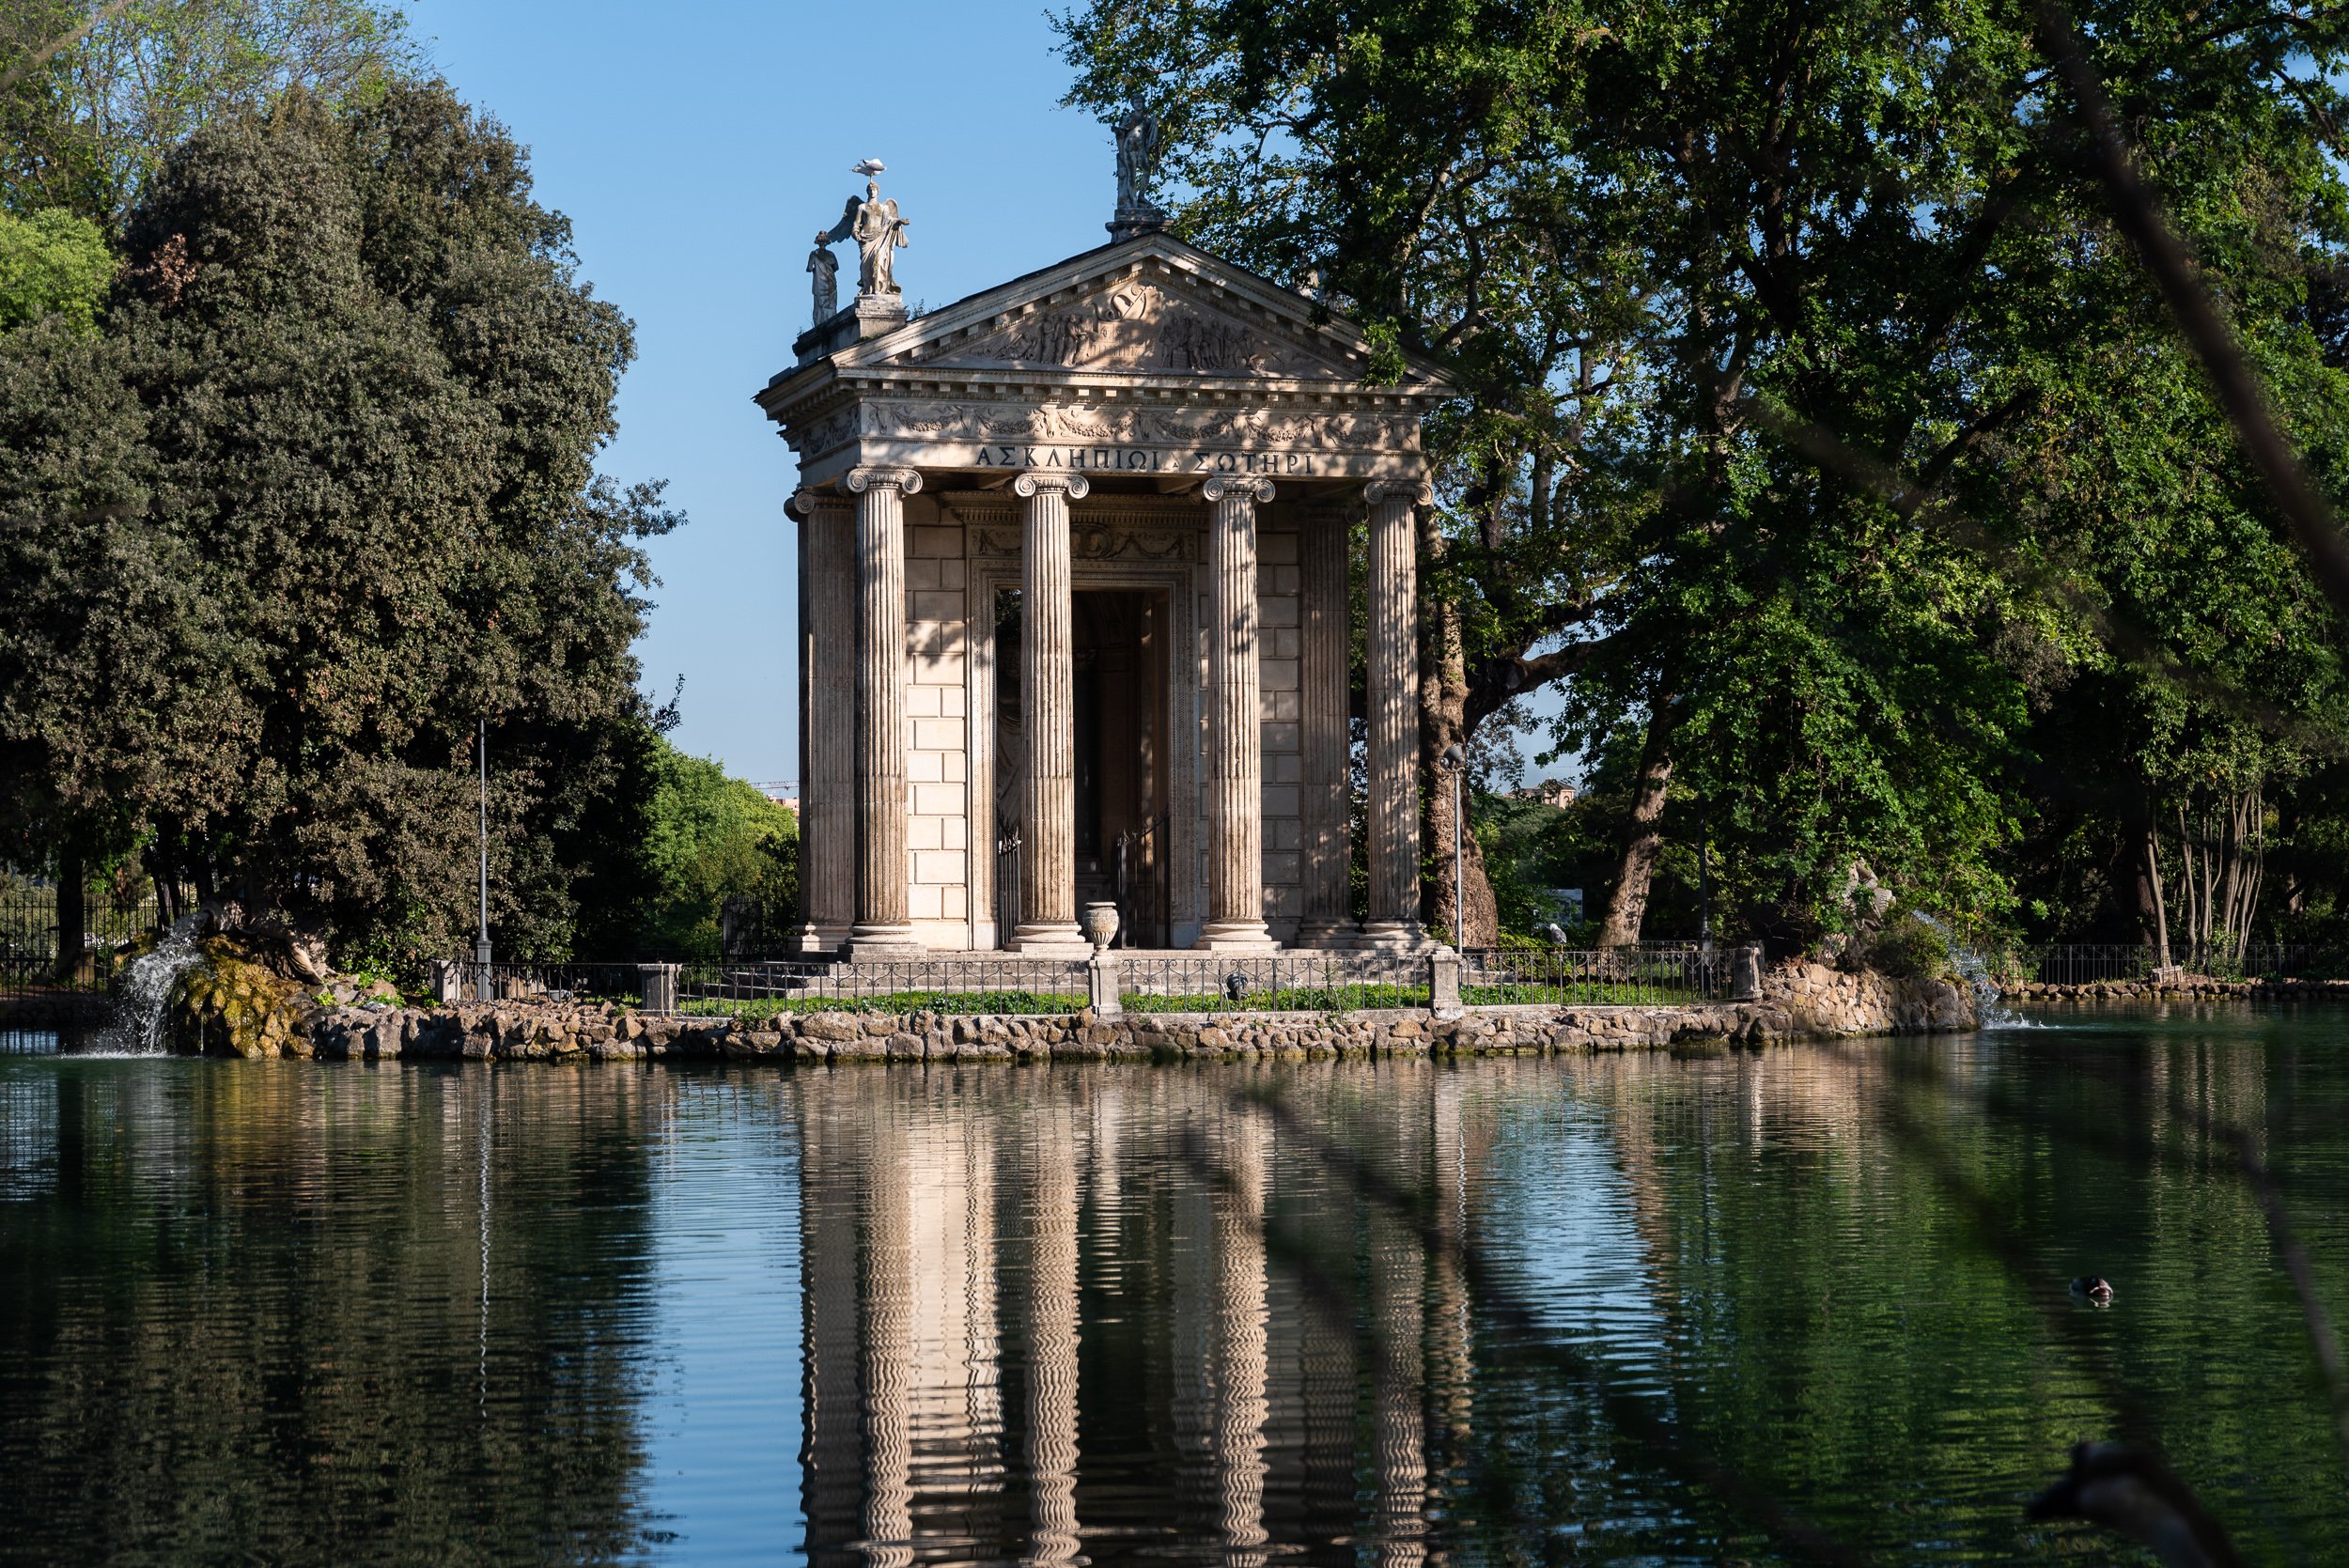 Villa Borghese Gardens - Boating Pond